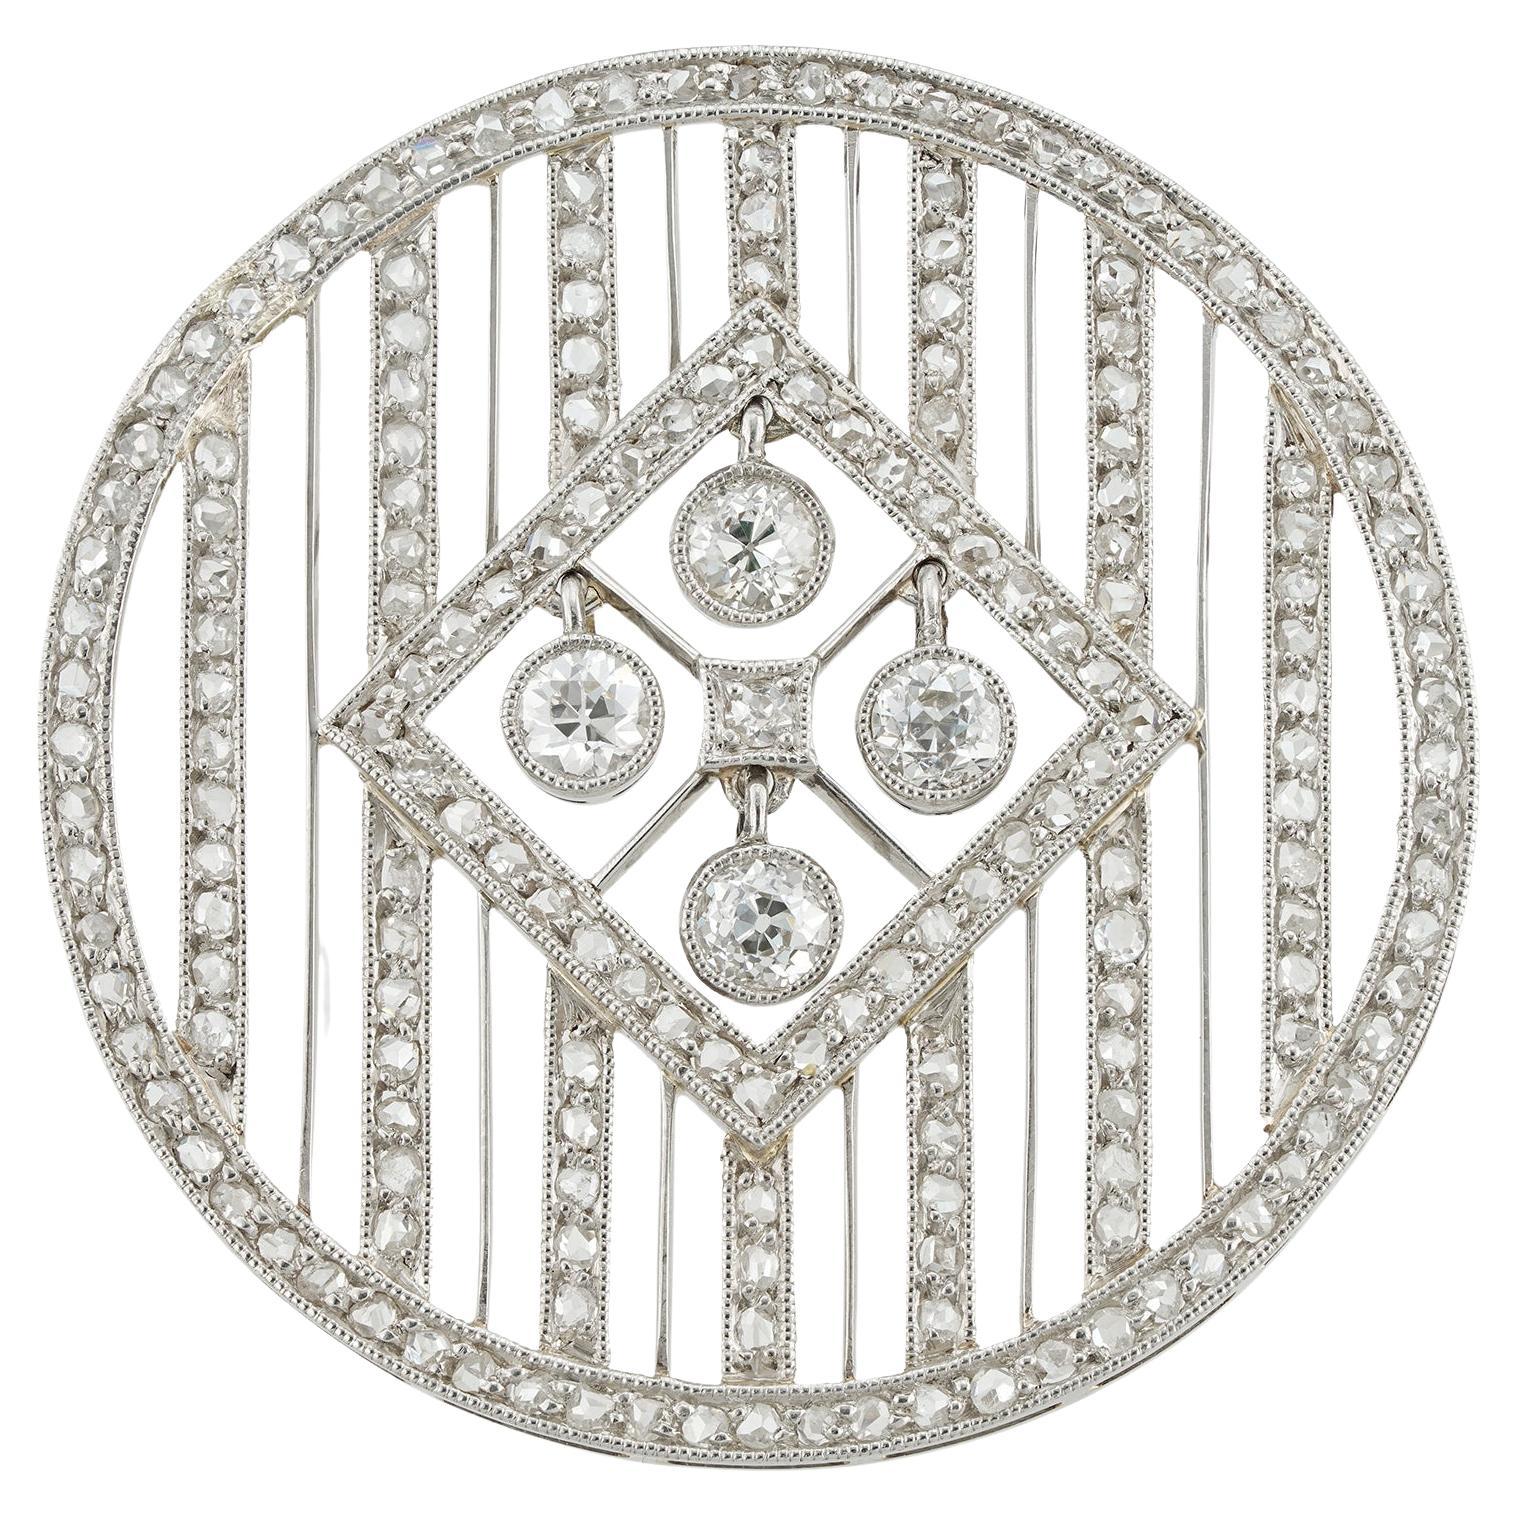 An Edwardian circular diamond brooch-pendant